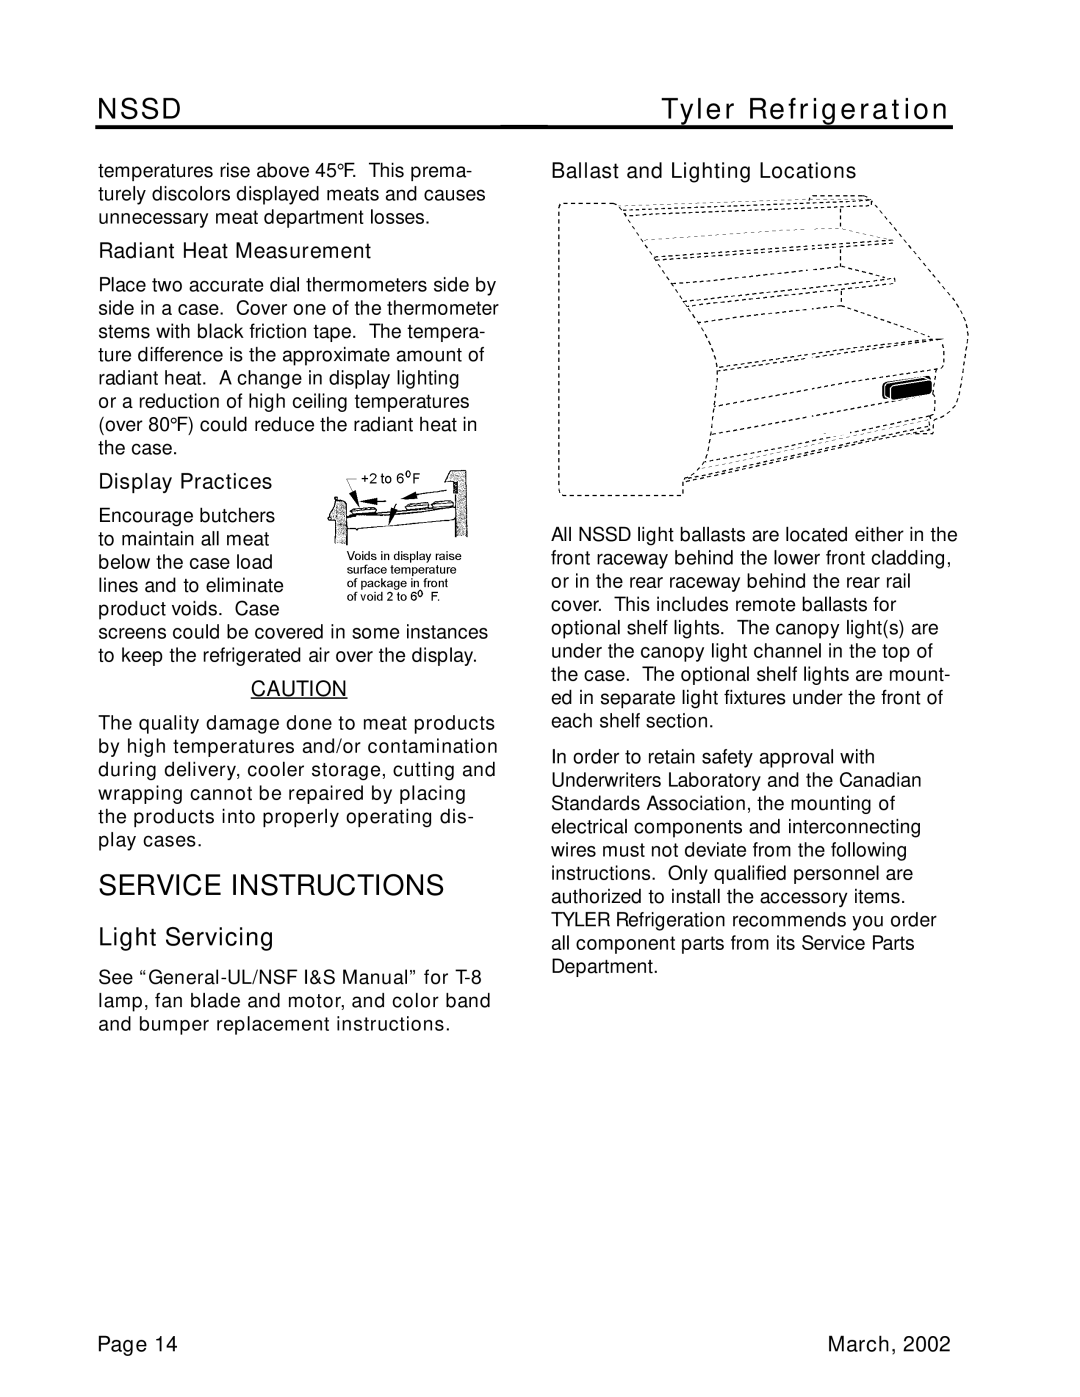 Tyler Refrigeration NSSD service manual Service Instructions, Nssd, Tyler Refrigeration, Light Servicing 